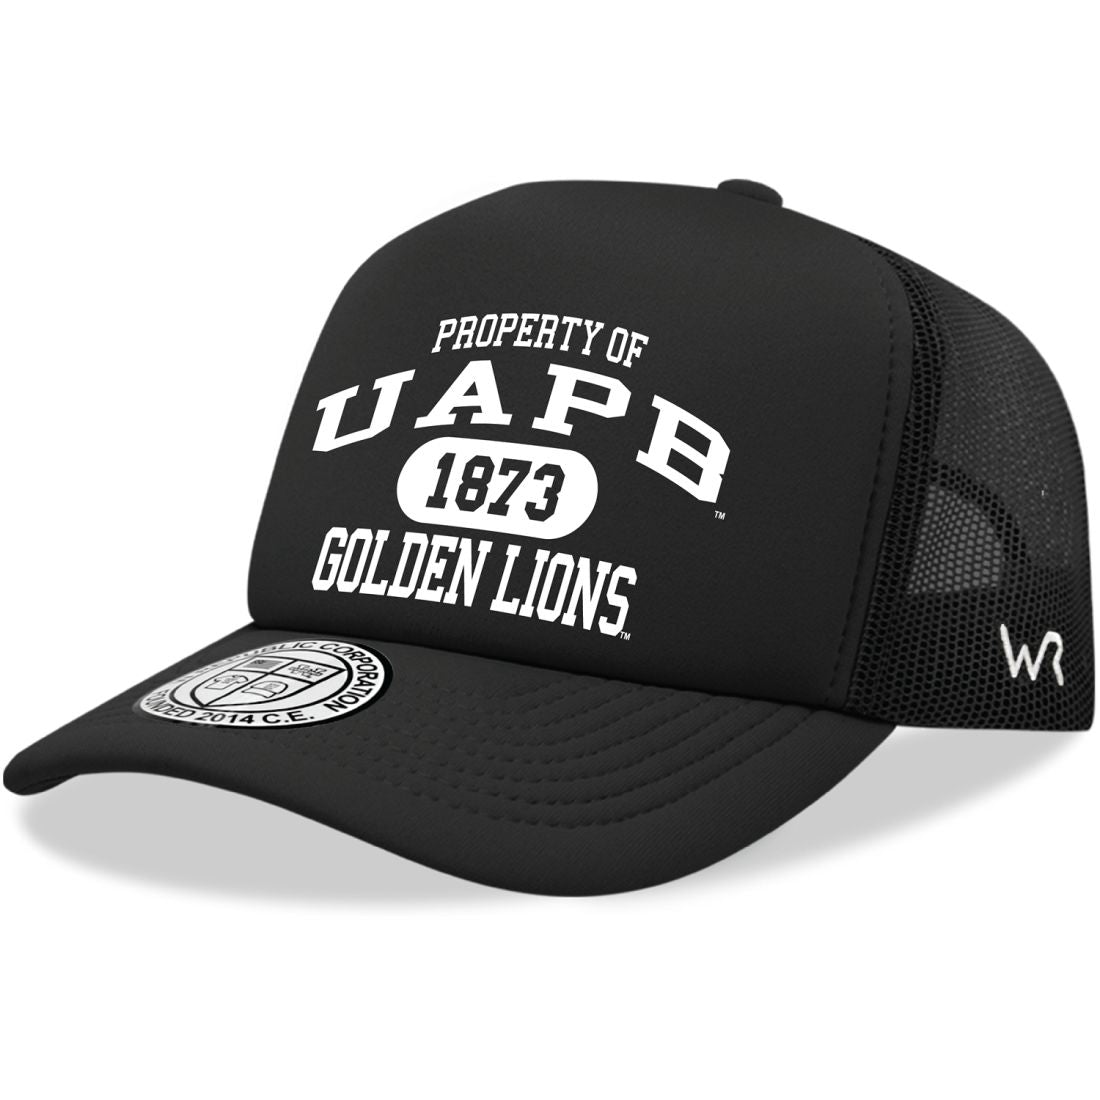 UAPB University of Arkansas Pine Bluff Golden Lions Property Foam Trucker Hats